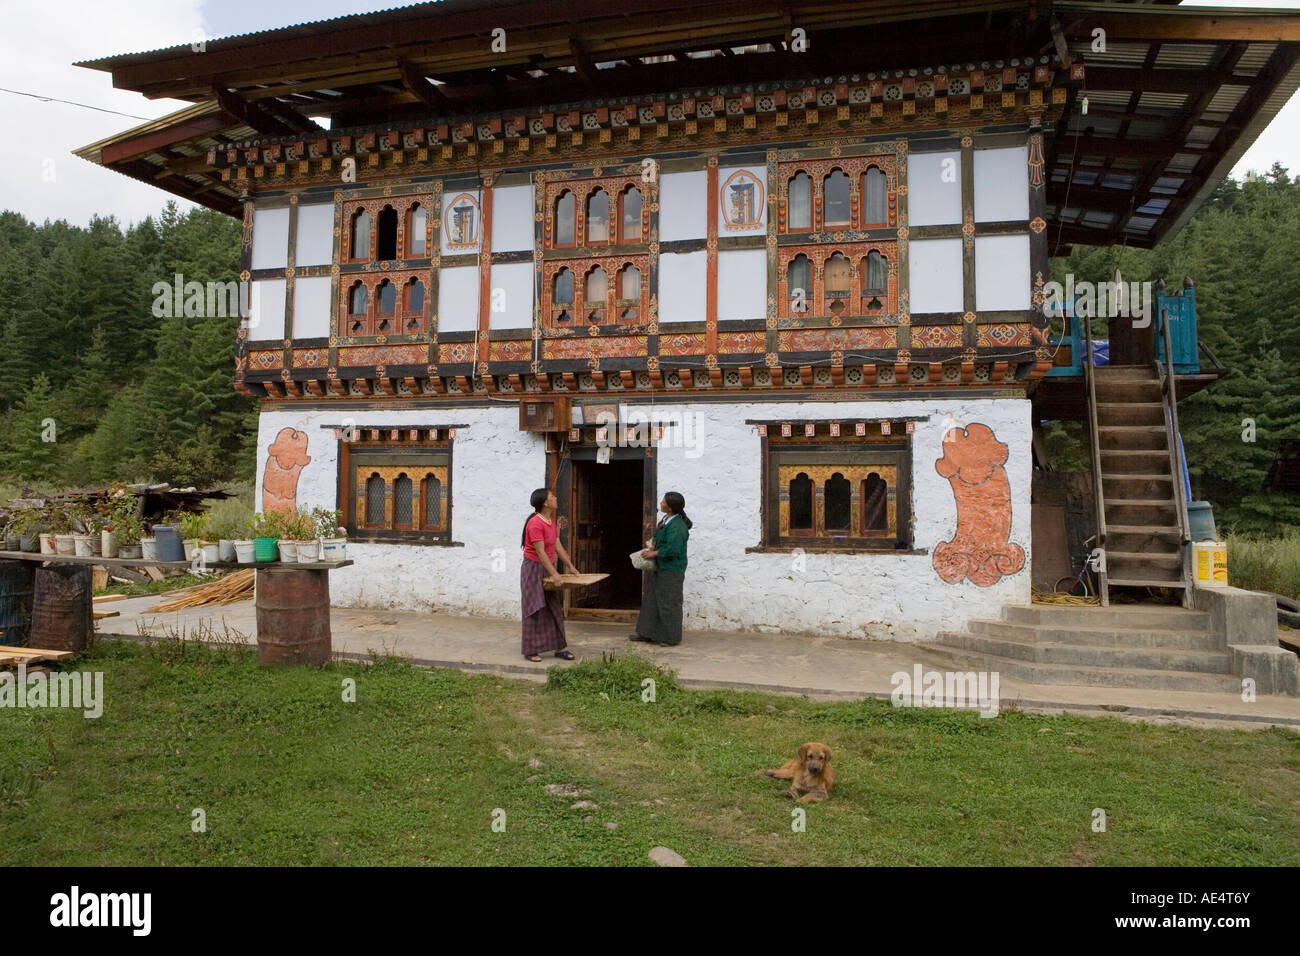 Phallus symbols on house to ward off evil spirits, Bumthang Valley, Bhutan, Asia Stock Photo